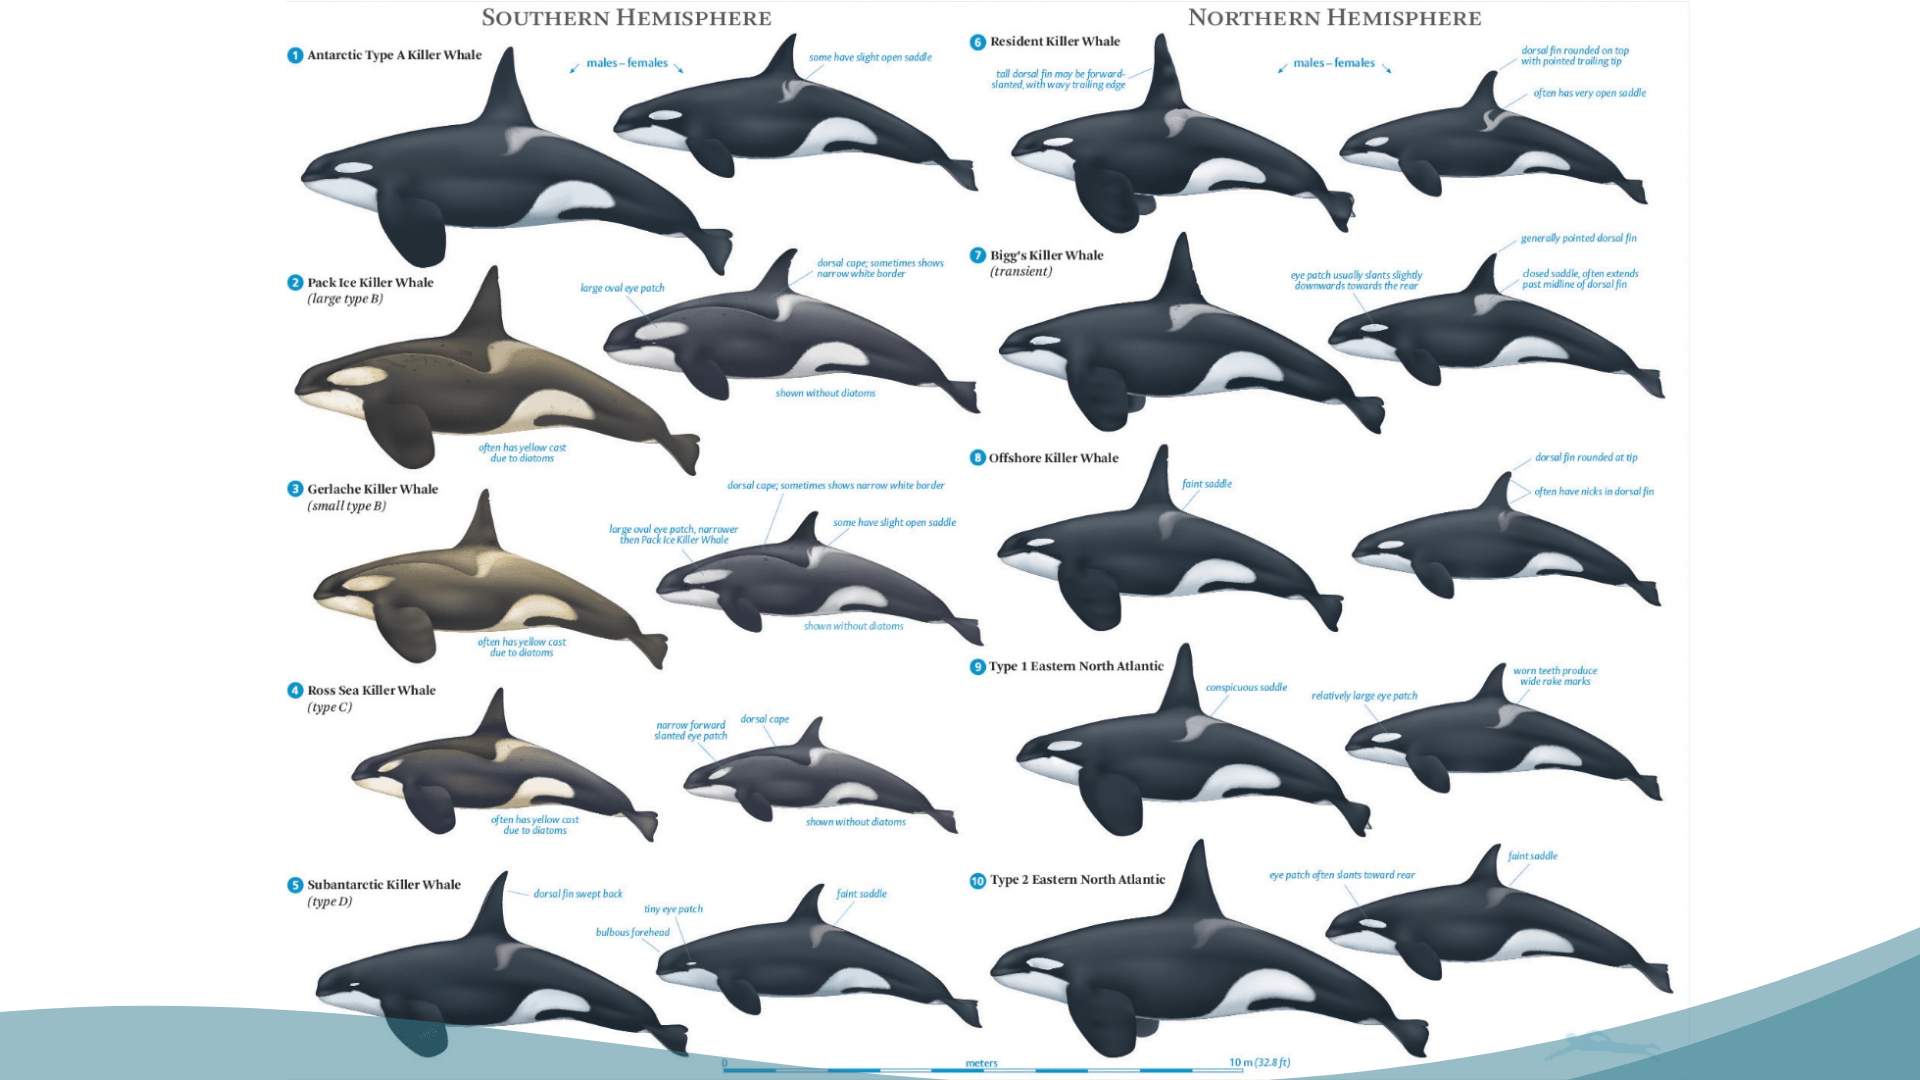 Orca ecotypes around the world